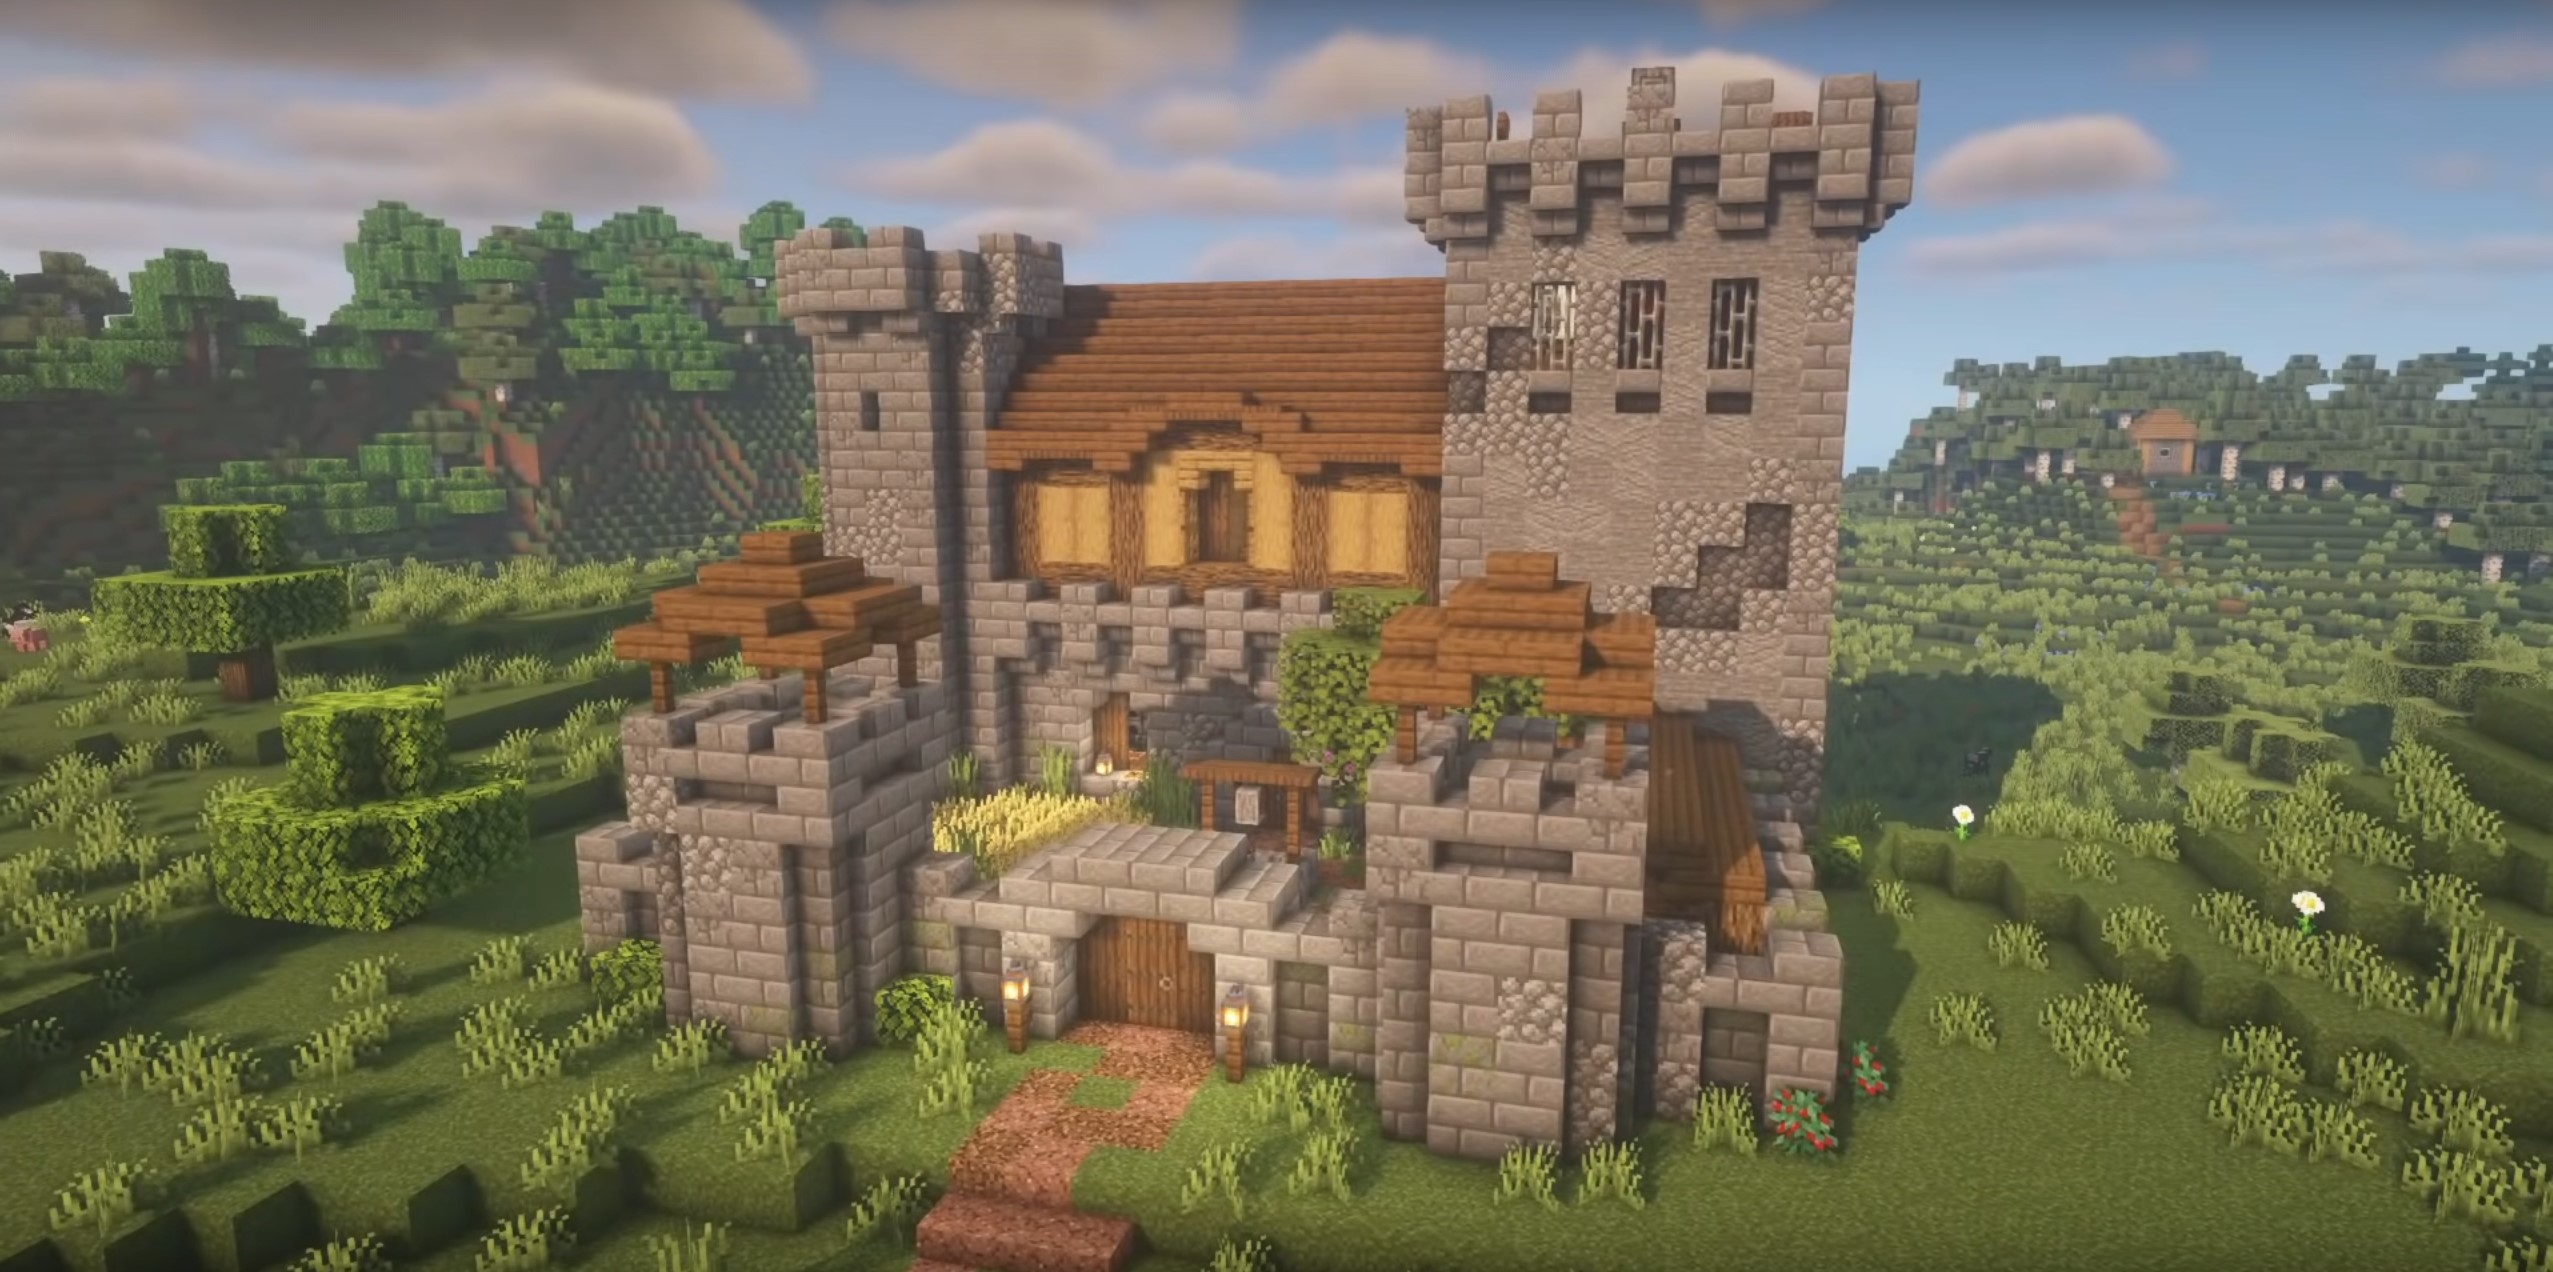 Survival Castle minecraft building idea